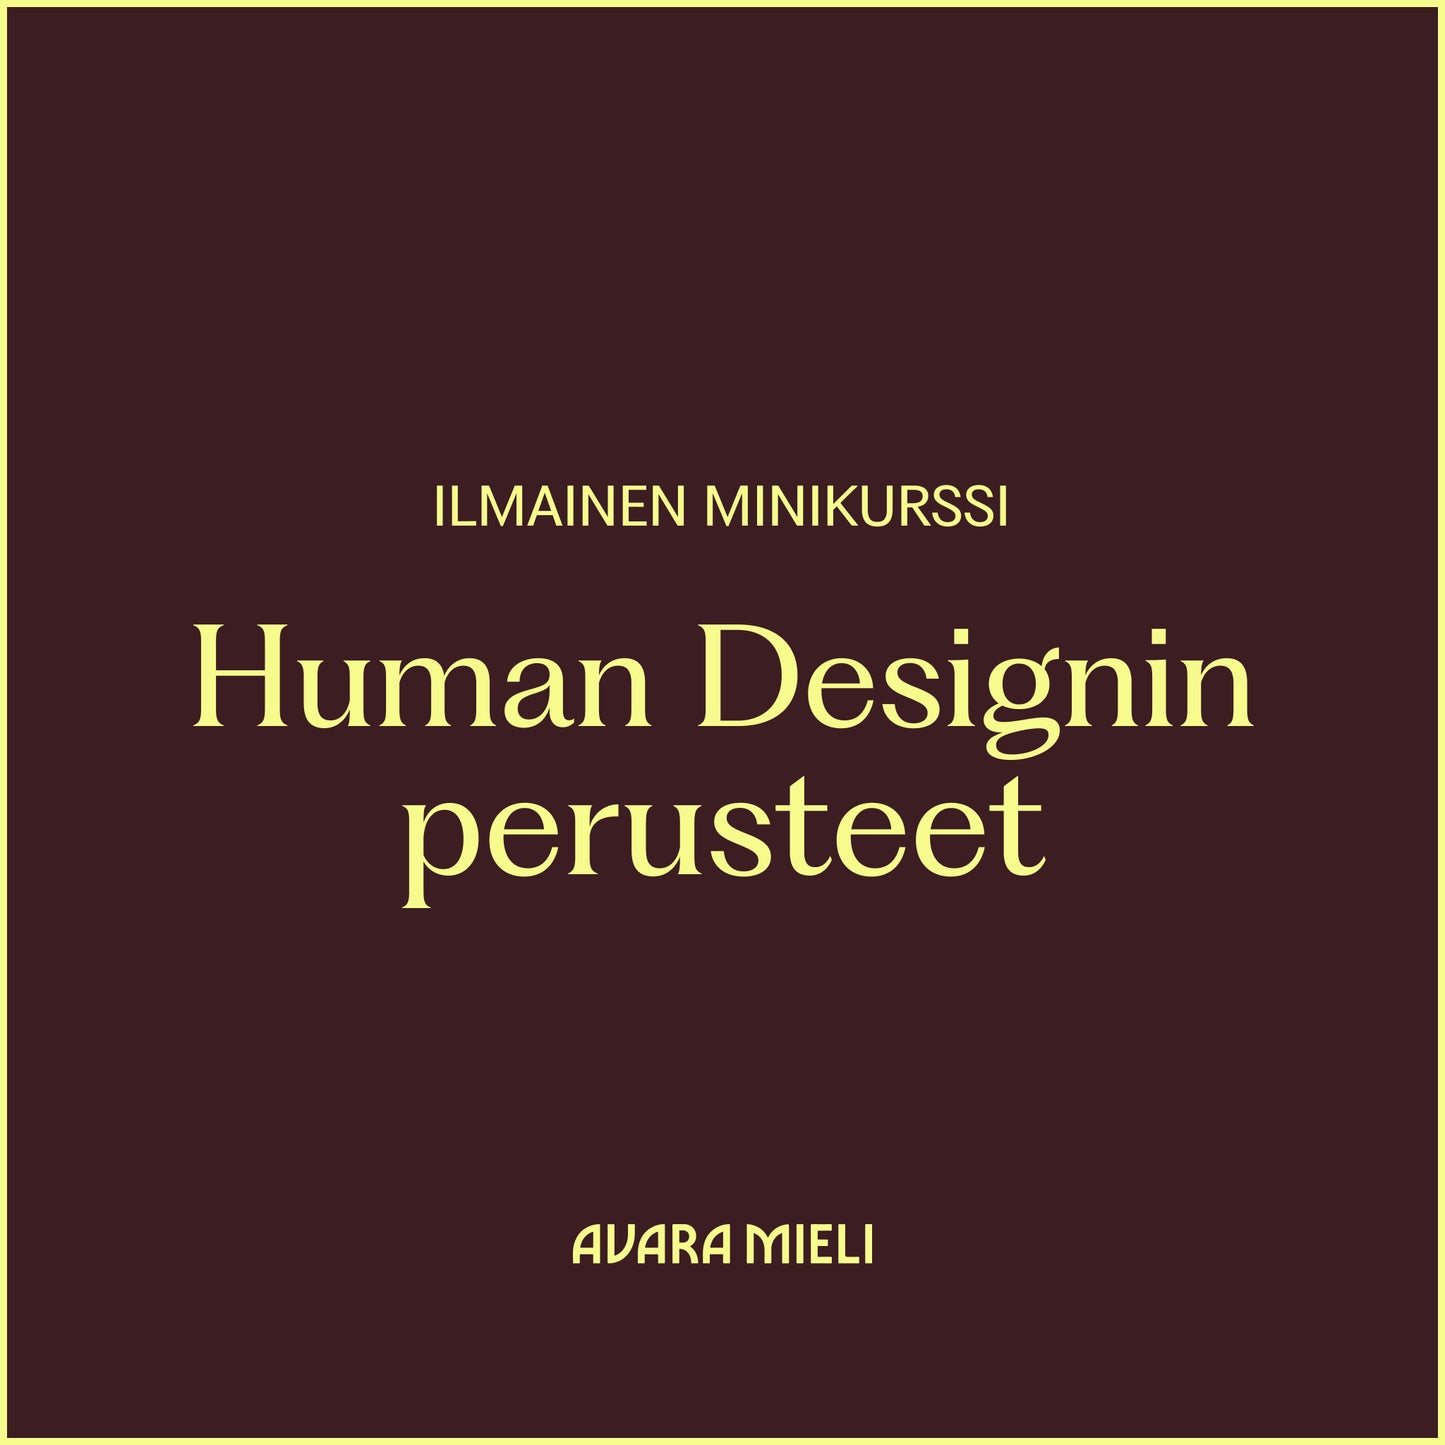 Minikurssi: Human Designin perusteet